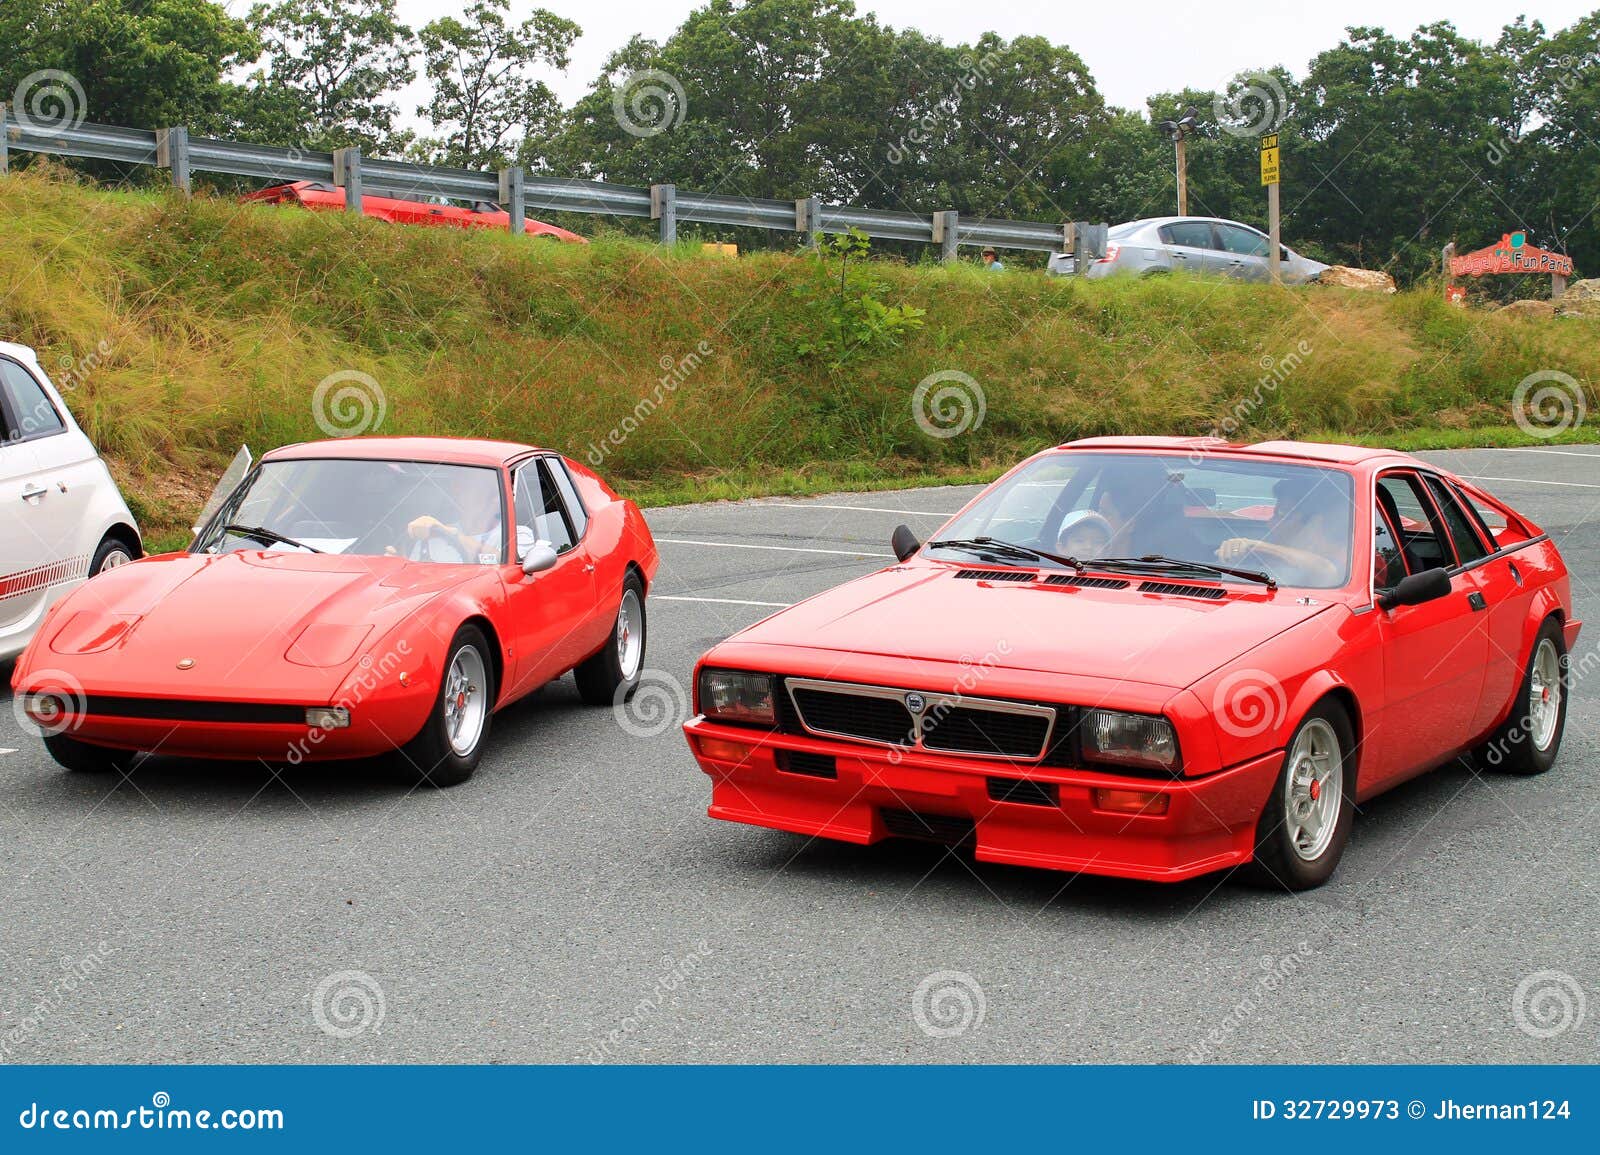 classic-lancia-scorpion-sports-car-fiat-lombardi-grand-prix-sports-car-to-side-italian-event-v...jpg